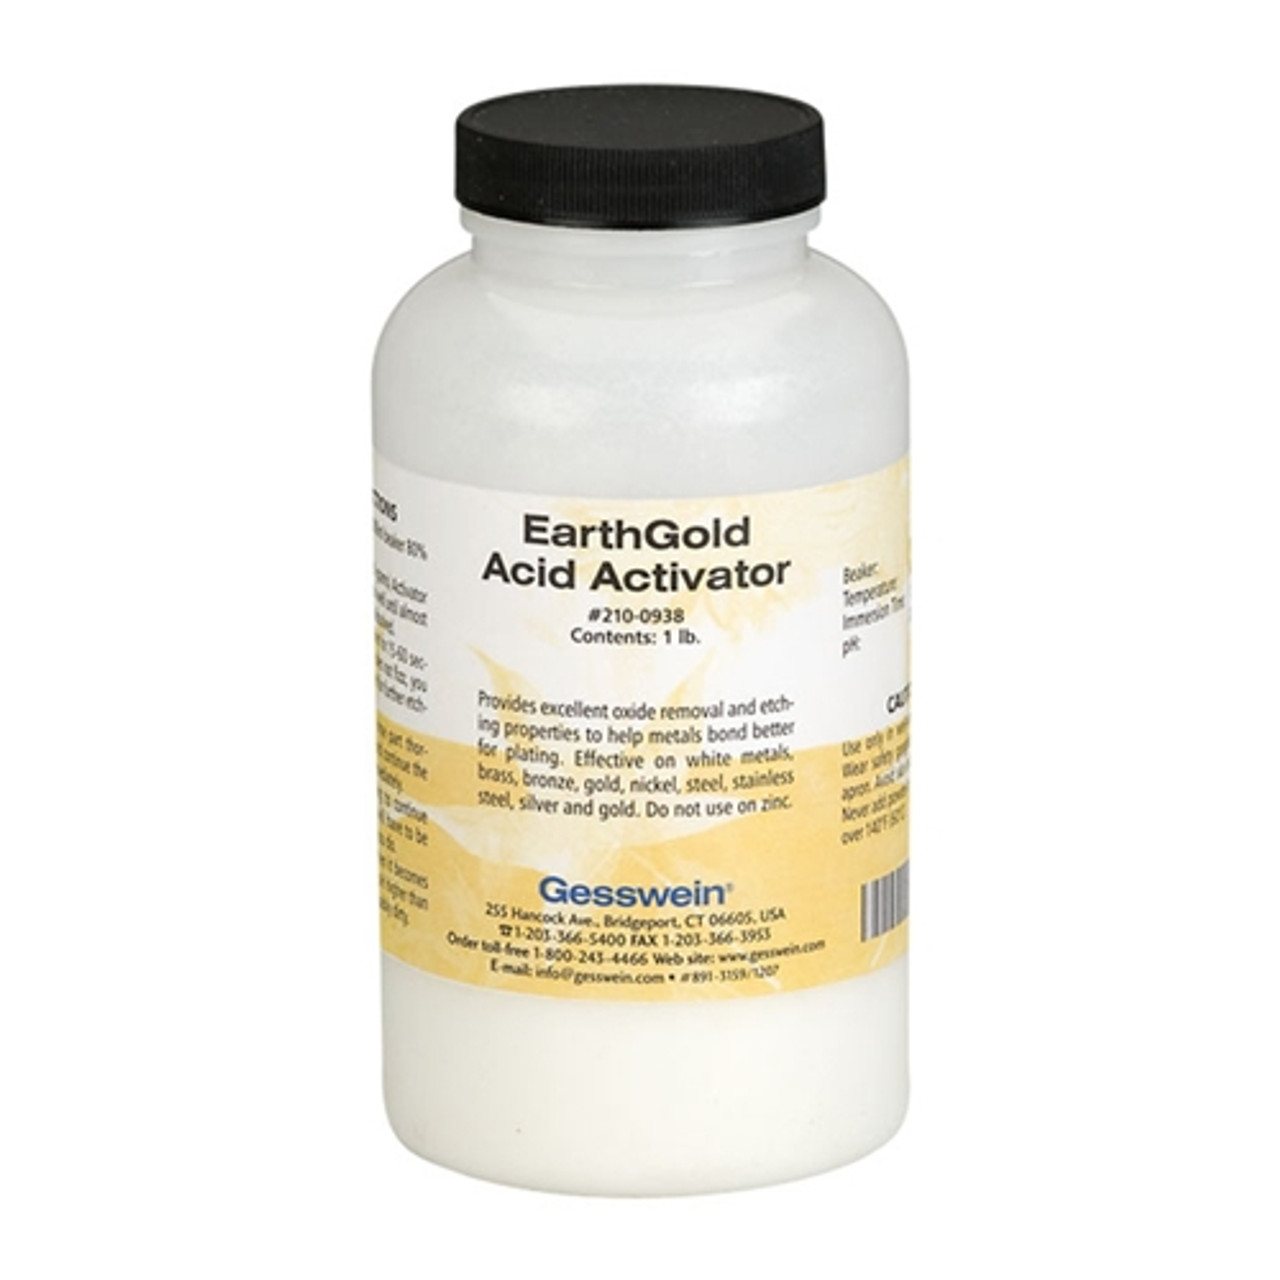 EarthGold Acid Activator - 1 lb.